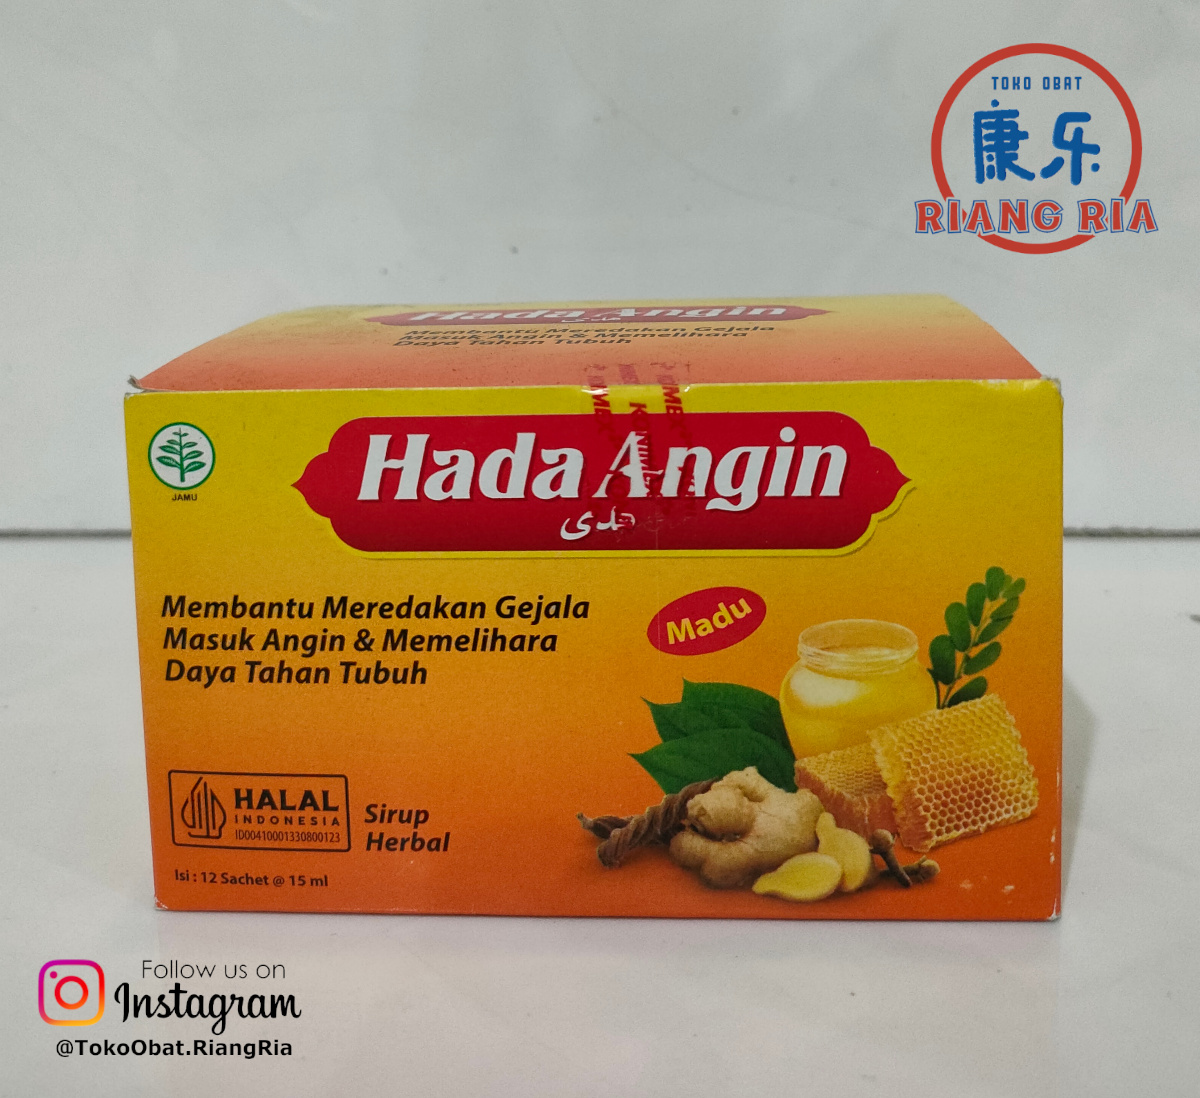 Hada Angin Box 12 Sachet @15ml – Sirup Herbal Masuk Angin